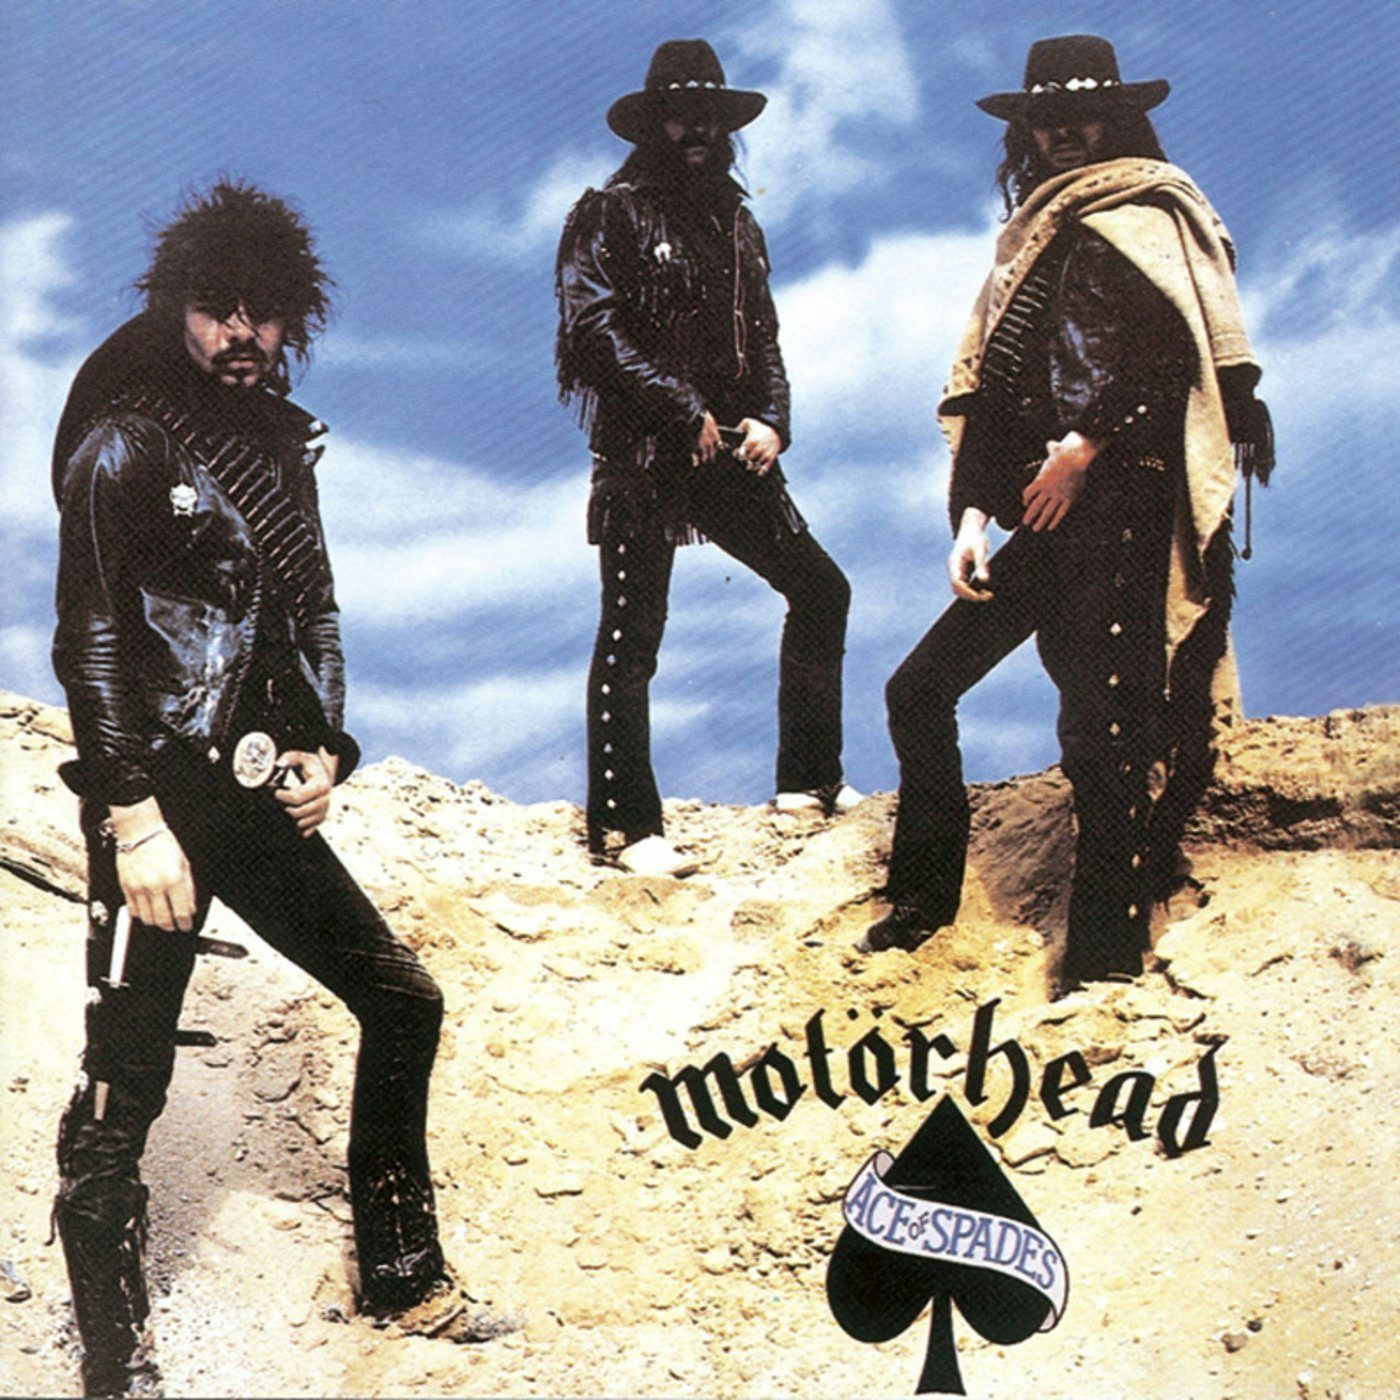 BBC LIVE IN SESSION 2 Vinyl Record - Motörhead